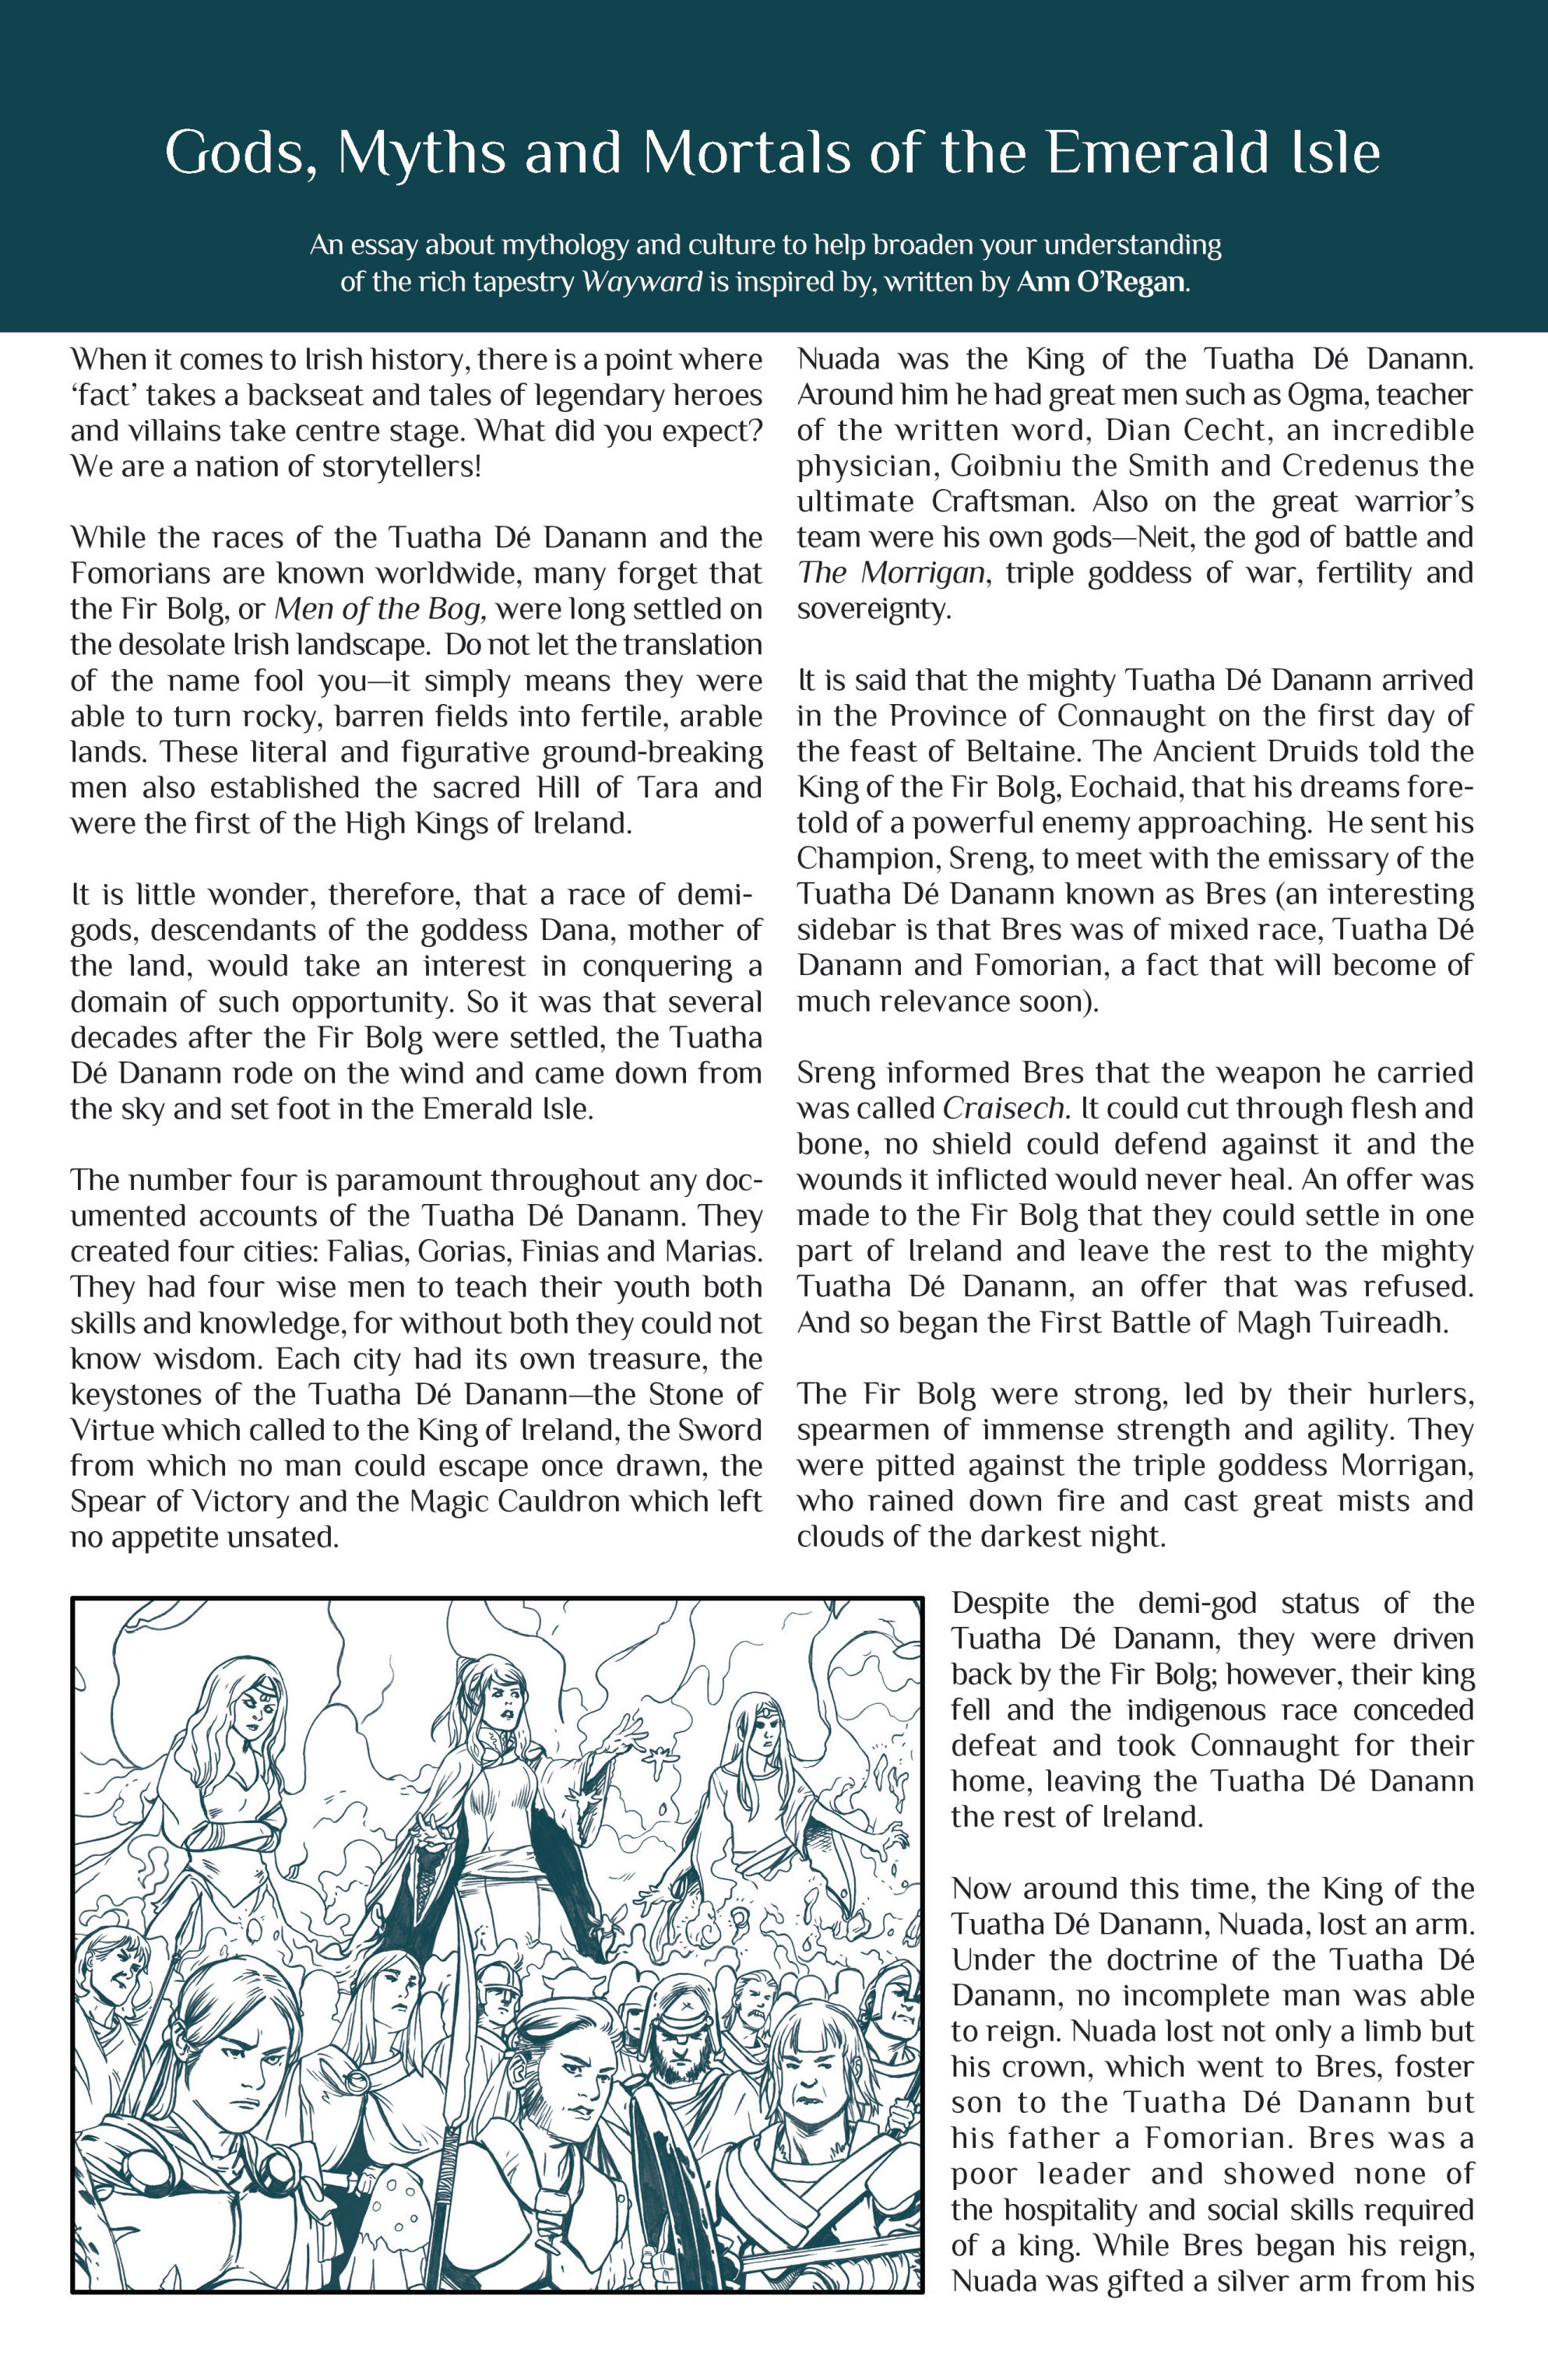 Read online Wayward comic -  Issue #18 - 24